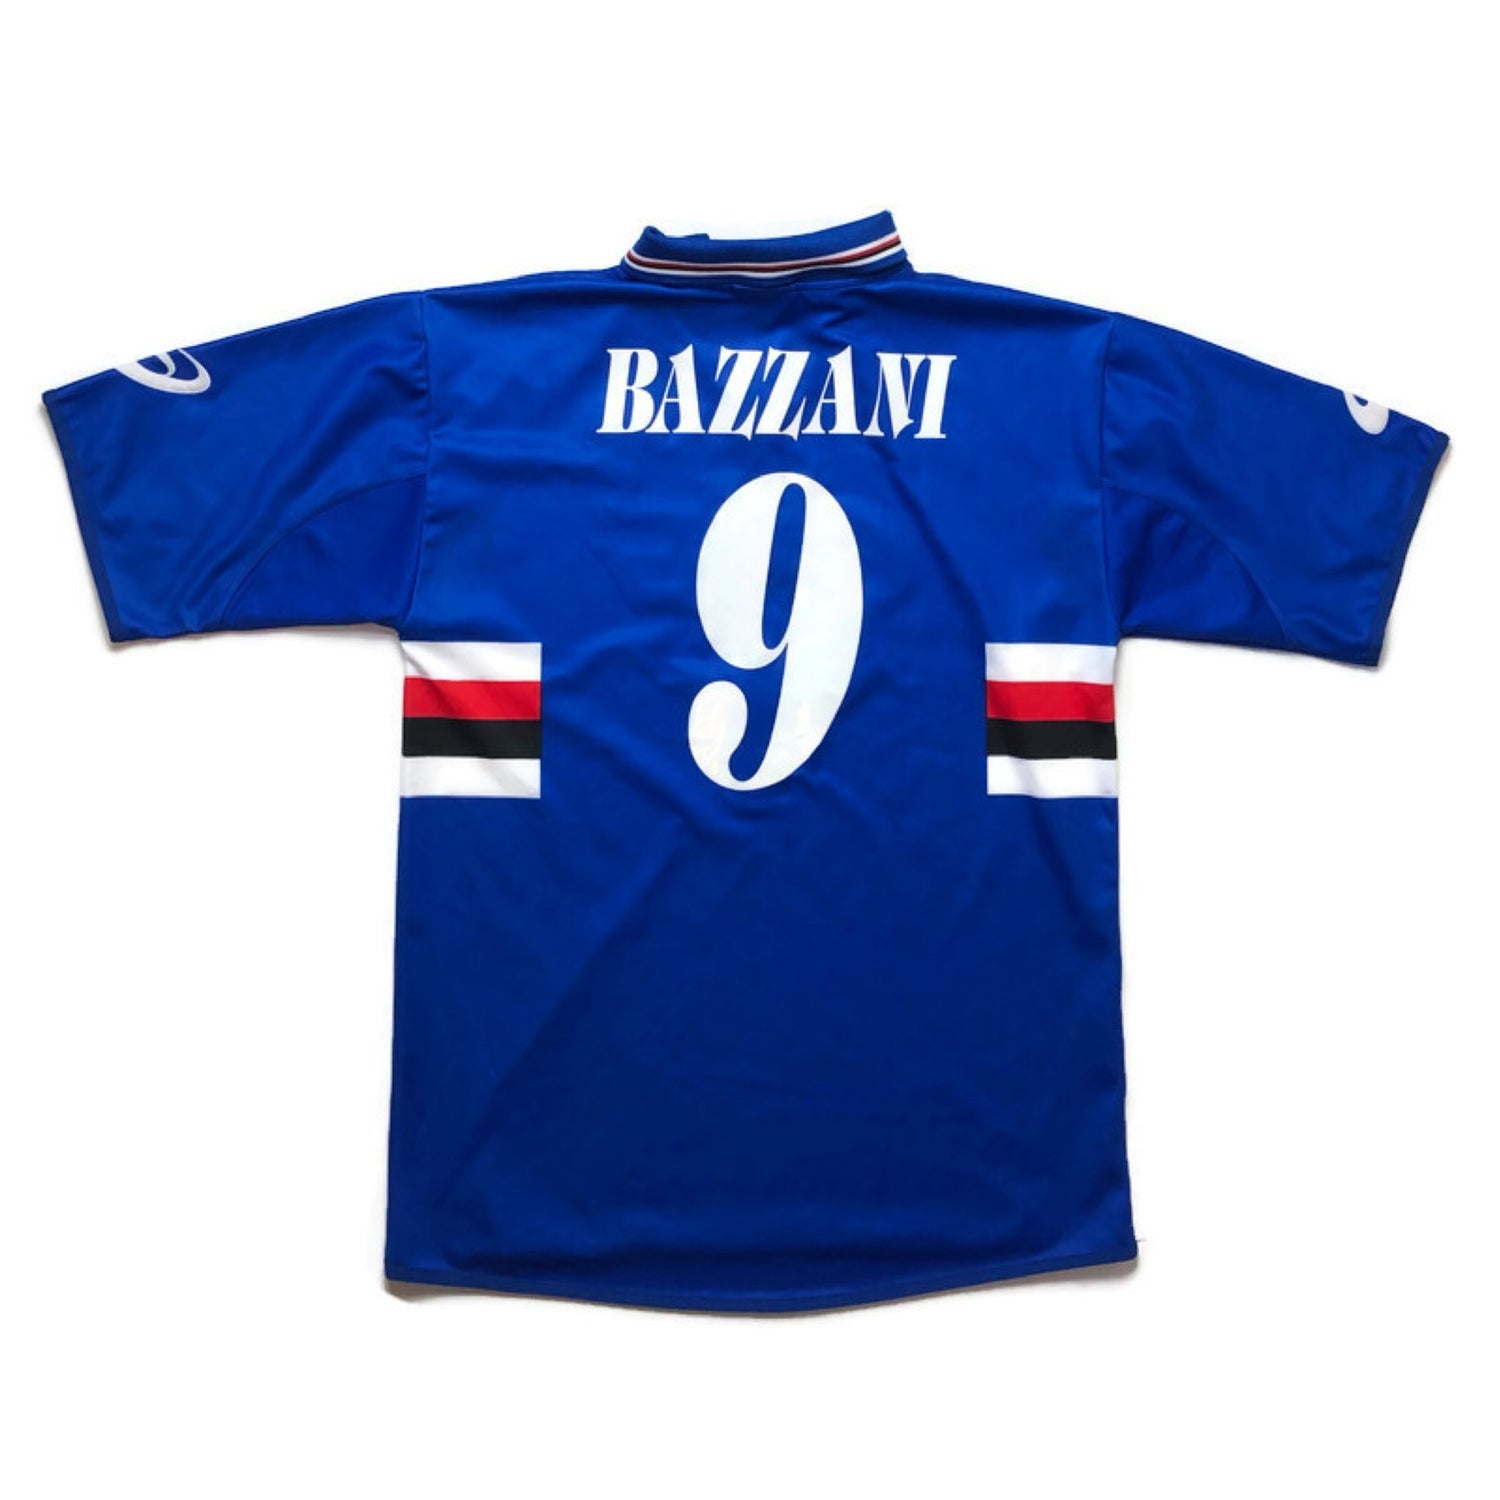 SAMPDORIA 2003/04 HOME FOOTBALL SHIRT ‘BAZZANI #9’ (XL)